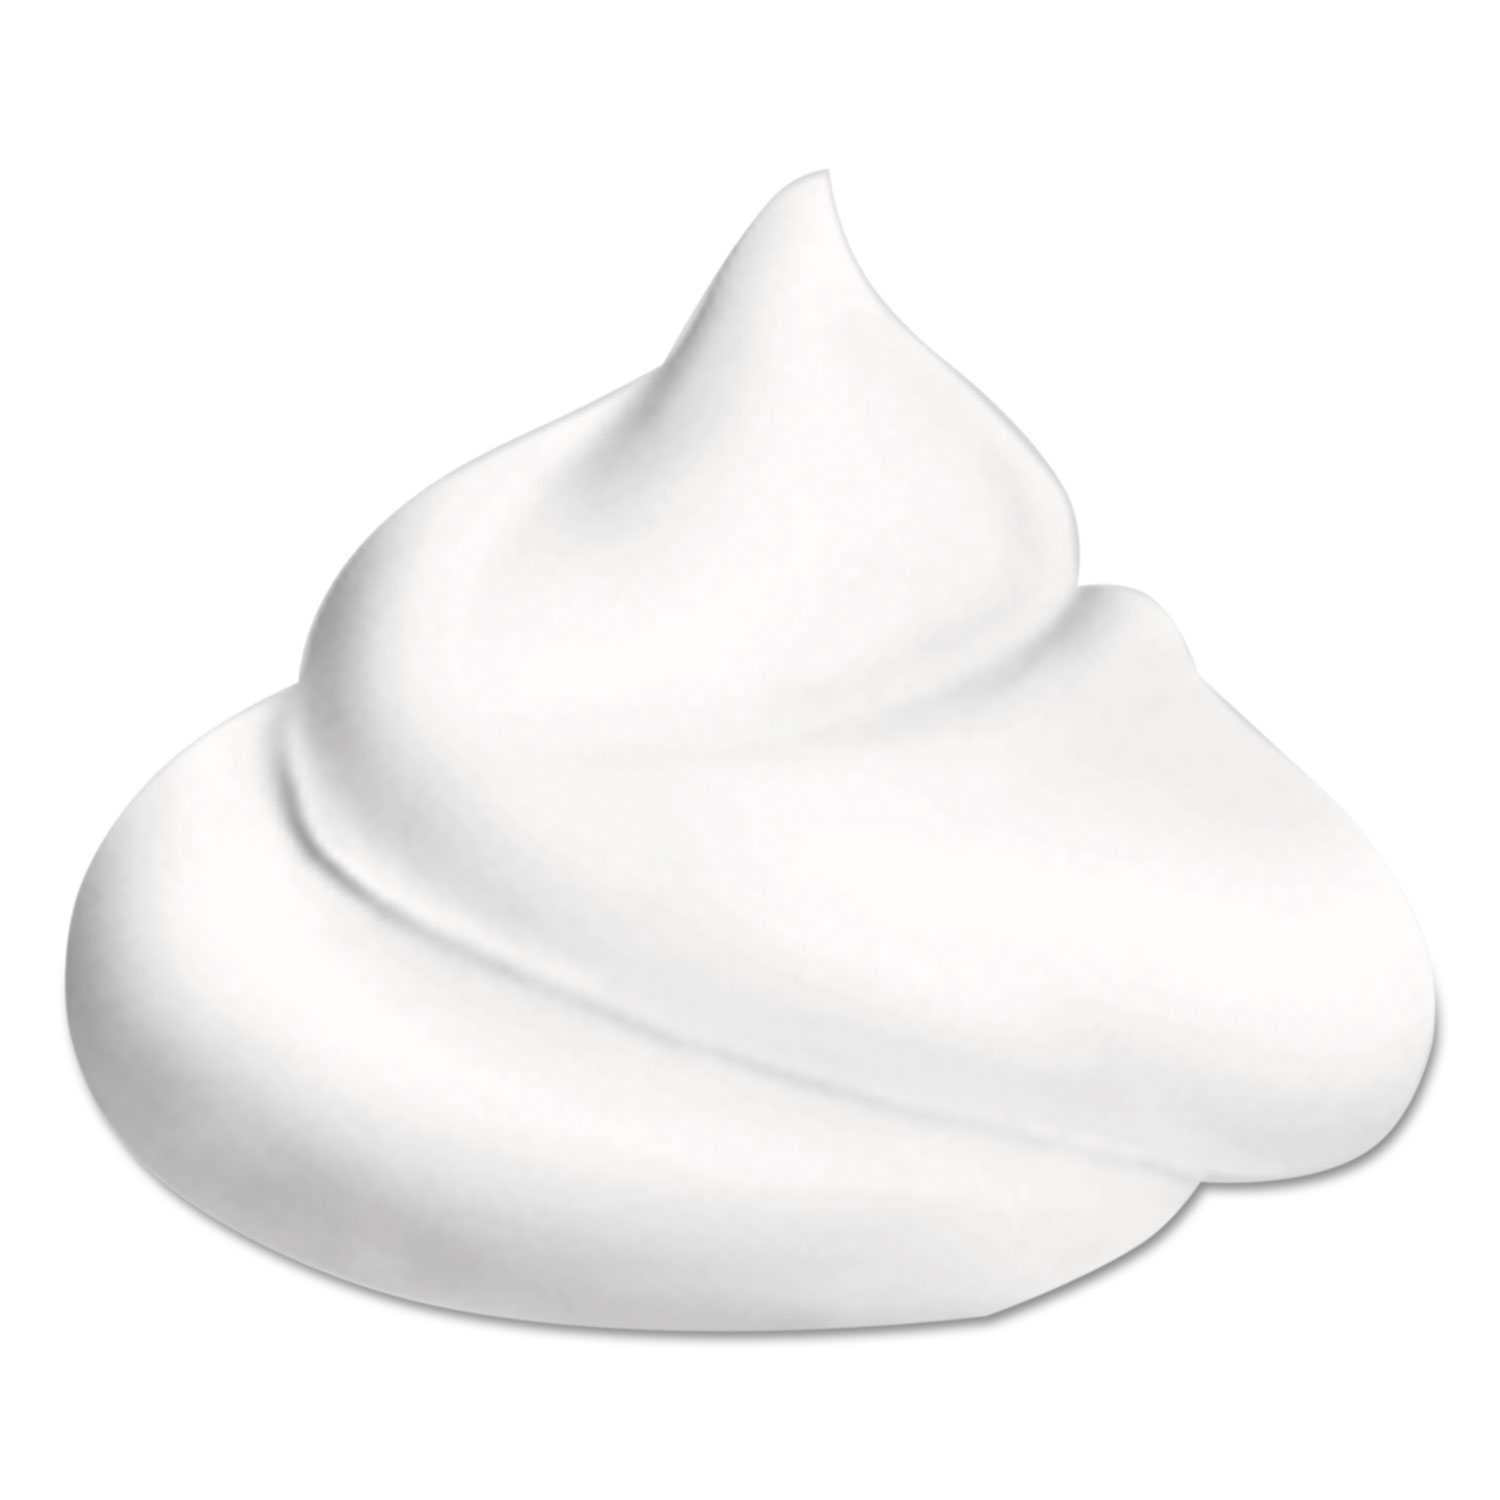 Foamy Shave Cream, Original Scent, 2 oz Aerosol, 48/Carton